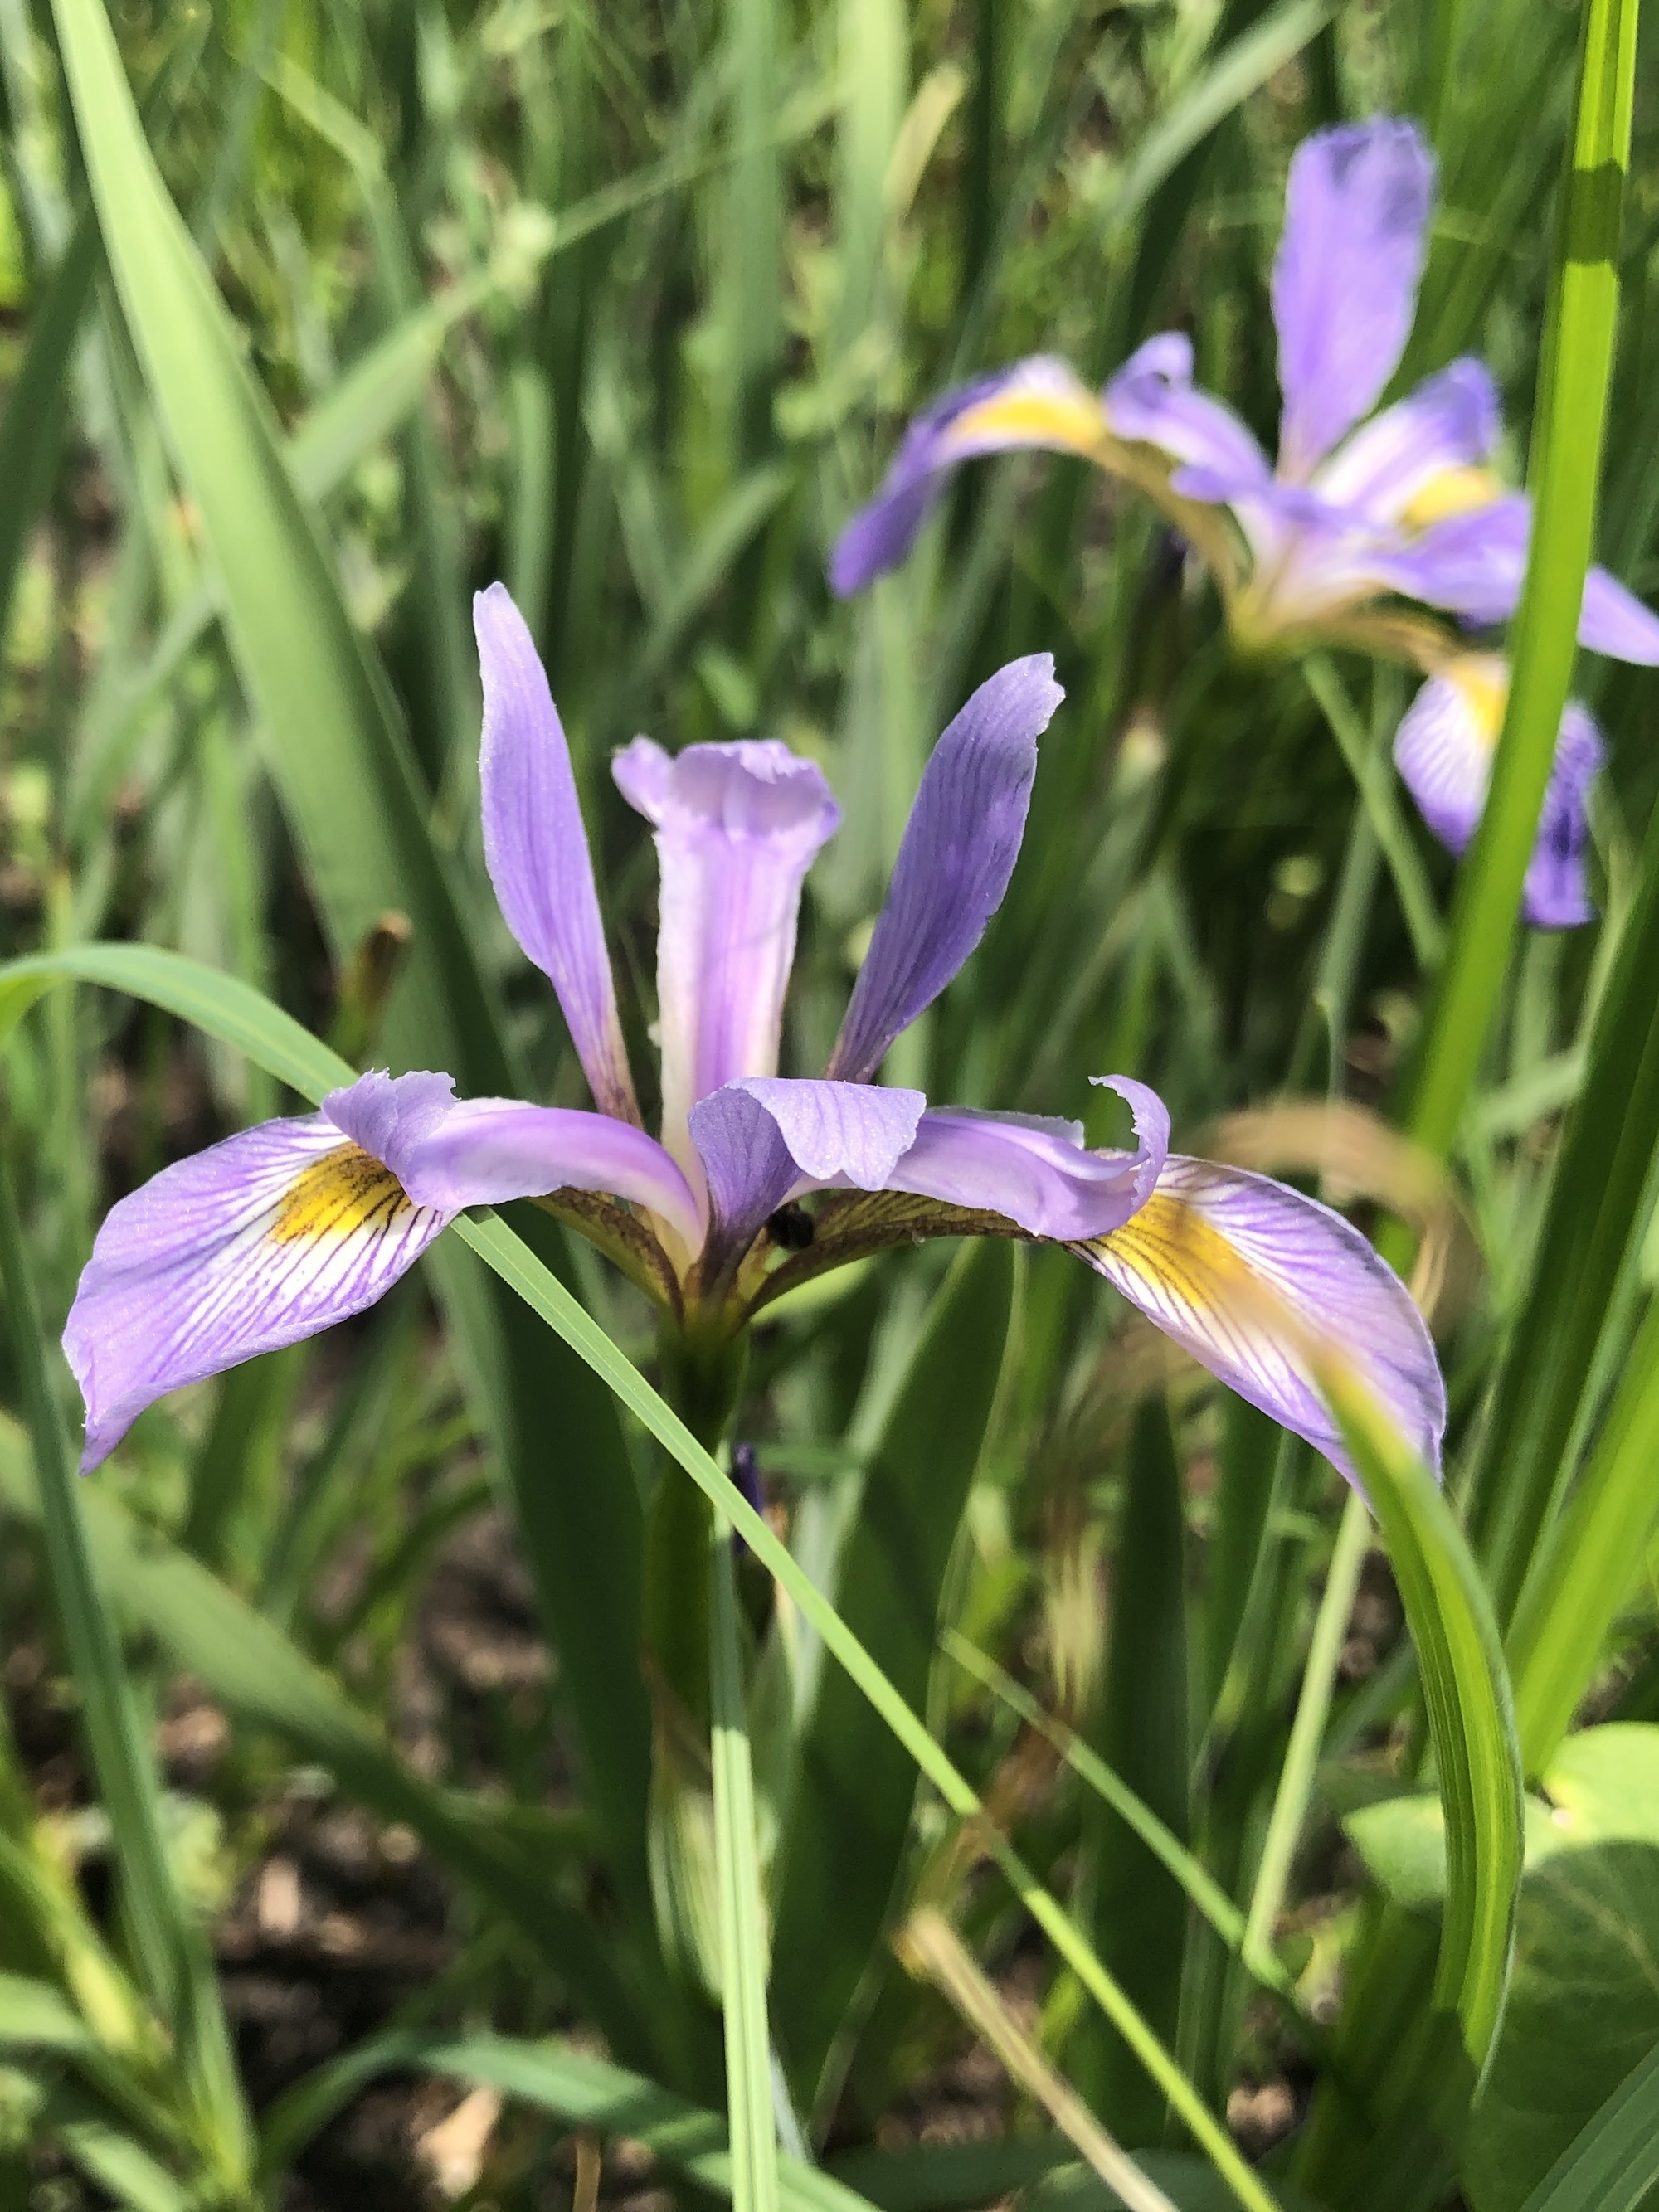 Blue Flag Iris in UW Arboretum Nature Garden on May 25, 2021.